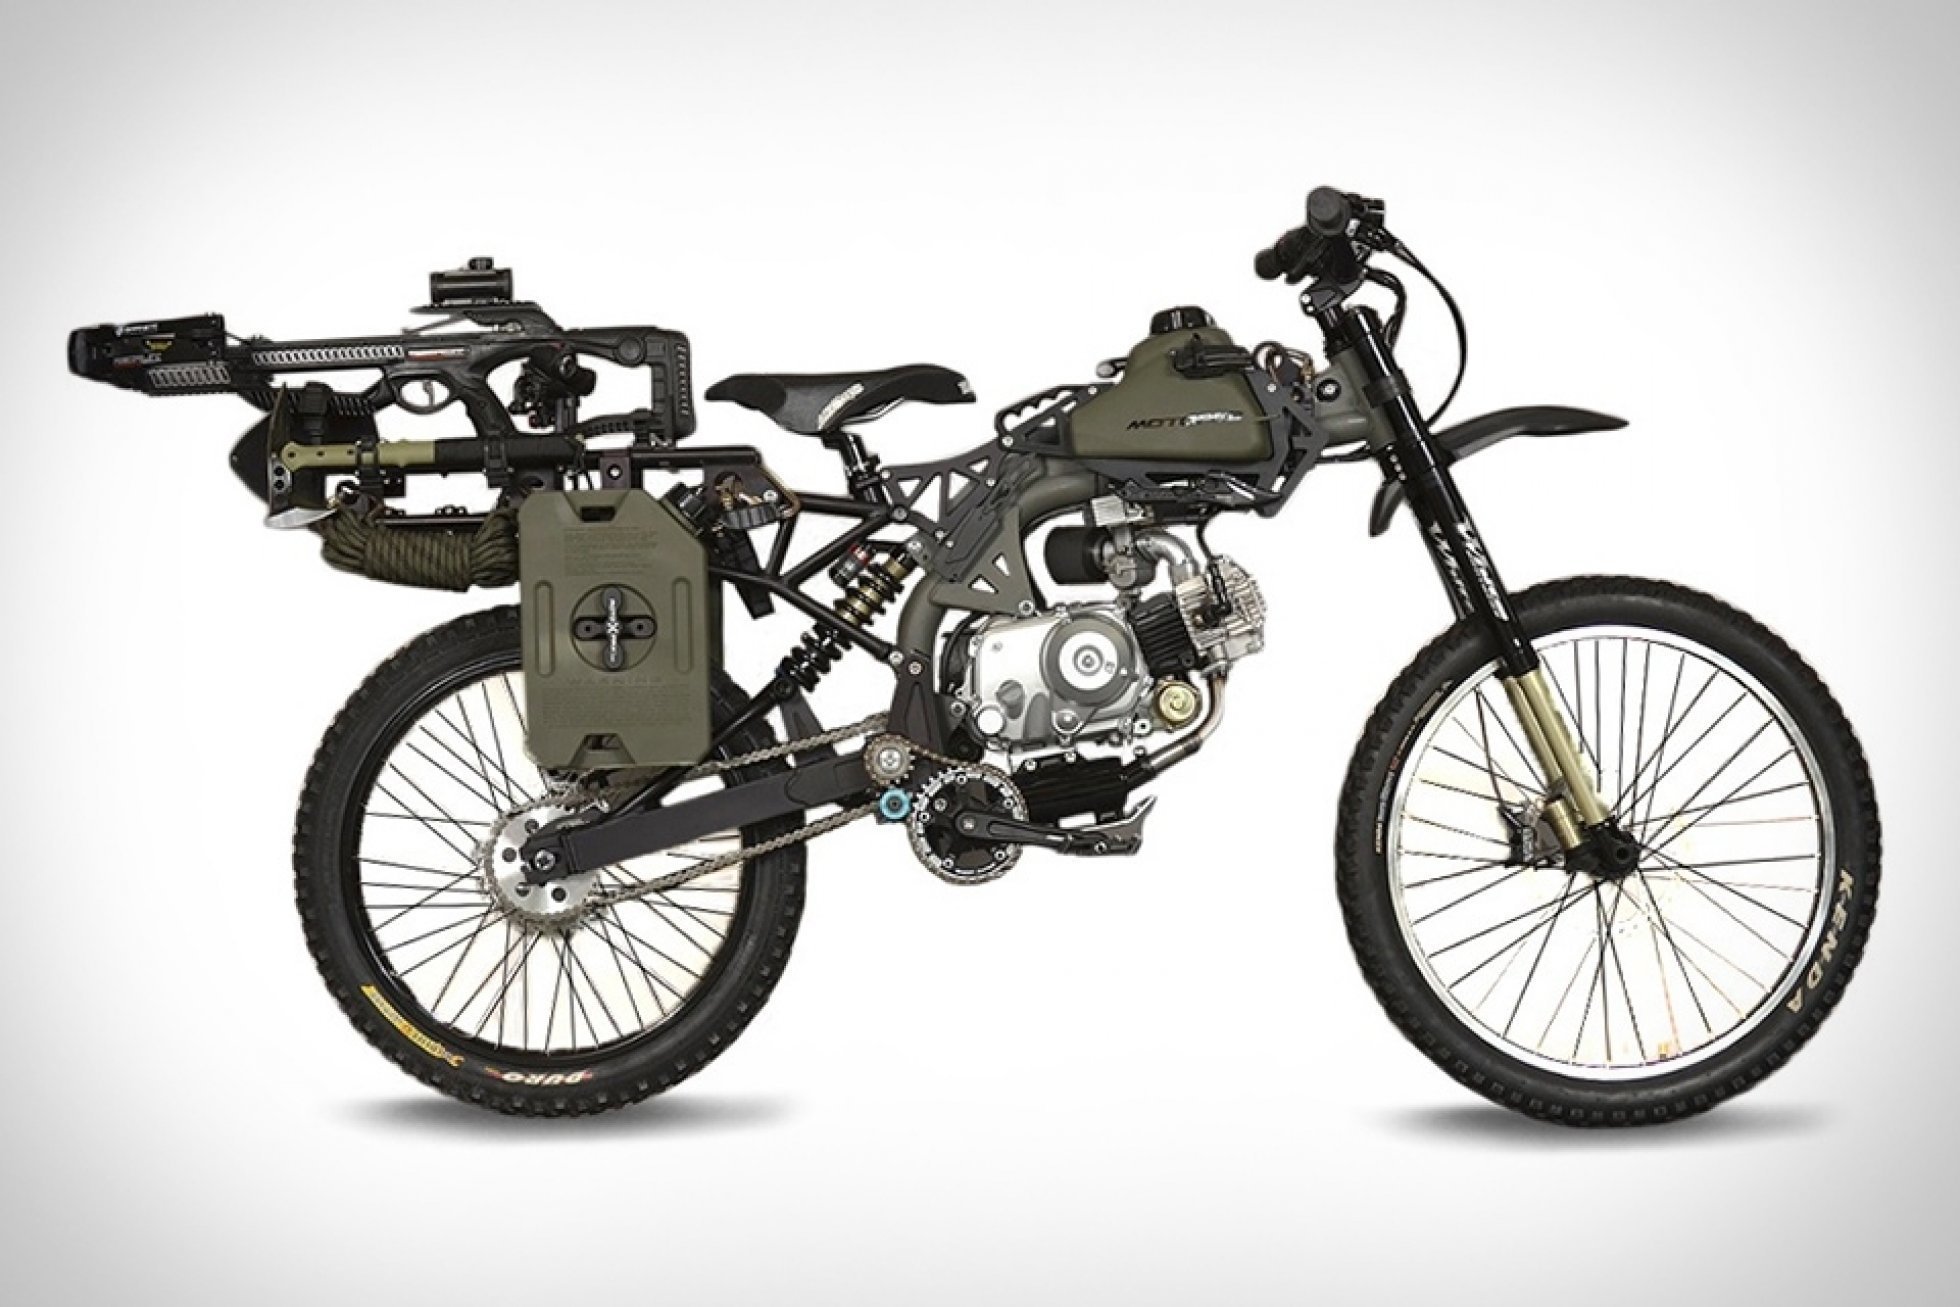 Www bike. Мотопед Survival Bike. Рама Motoped Survival Bike. Motoped 125cc. Мотовелосипед для выживания мотопед.